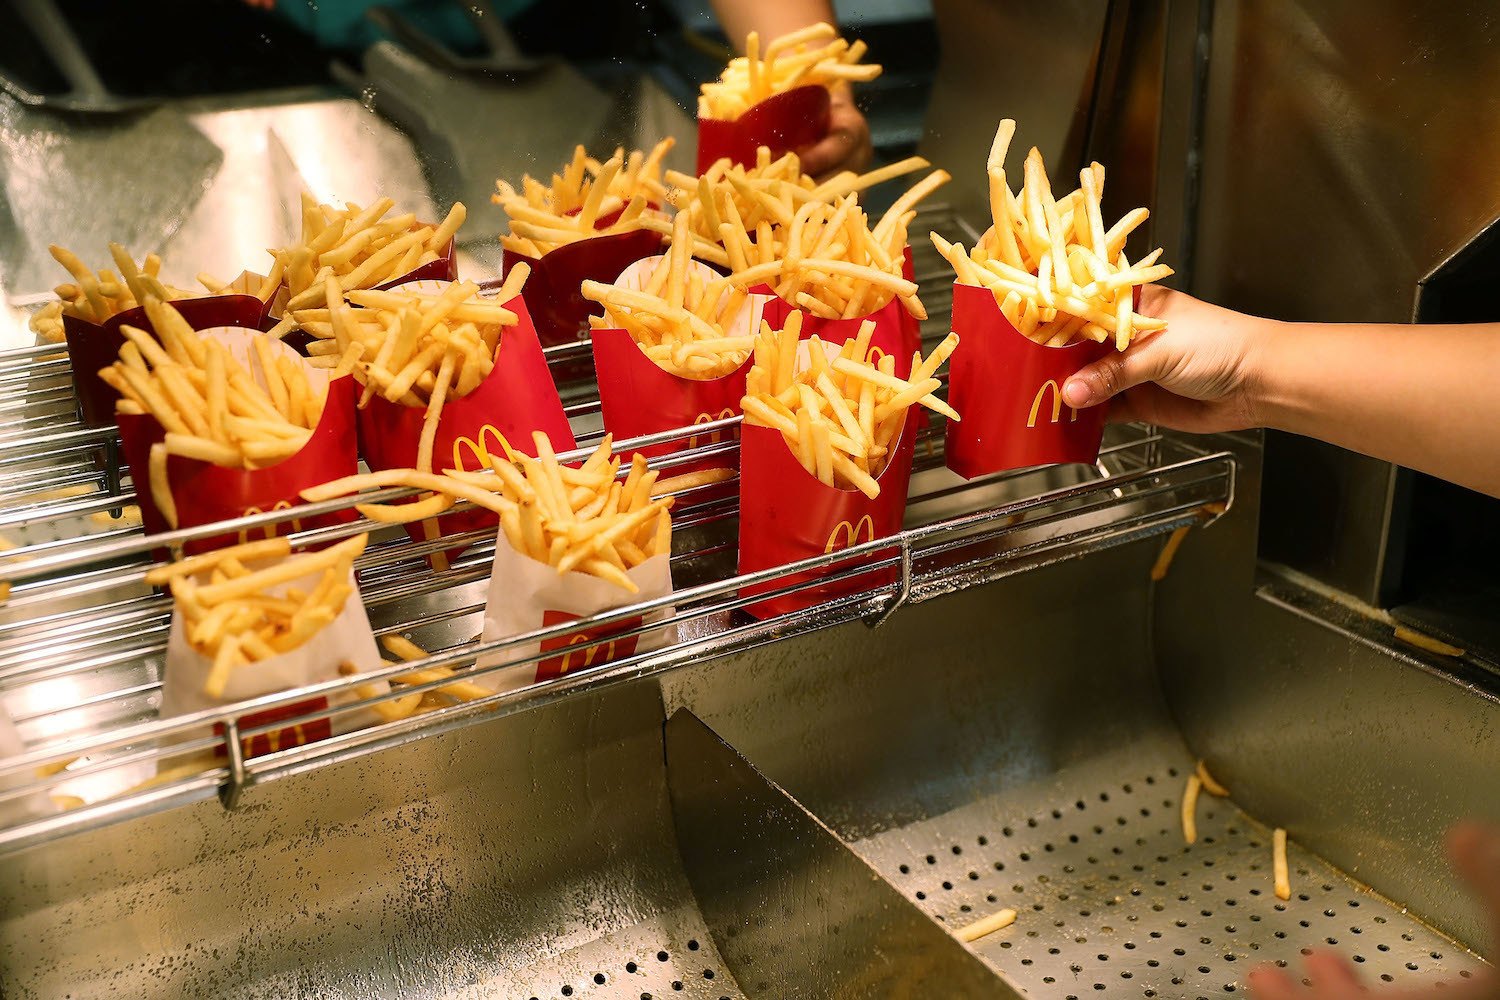 McDonald's crew member Samantha Medina prepares french fries as the McDonald's restaurant. April 25, 2017